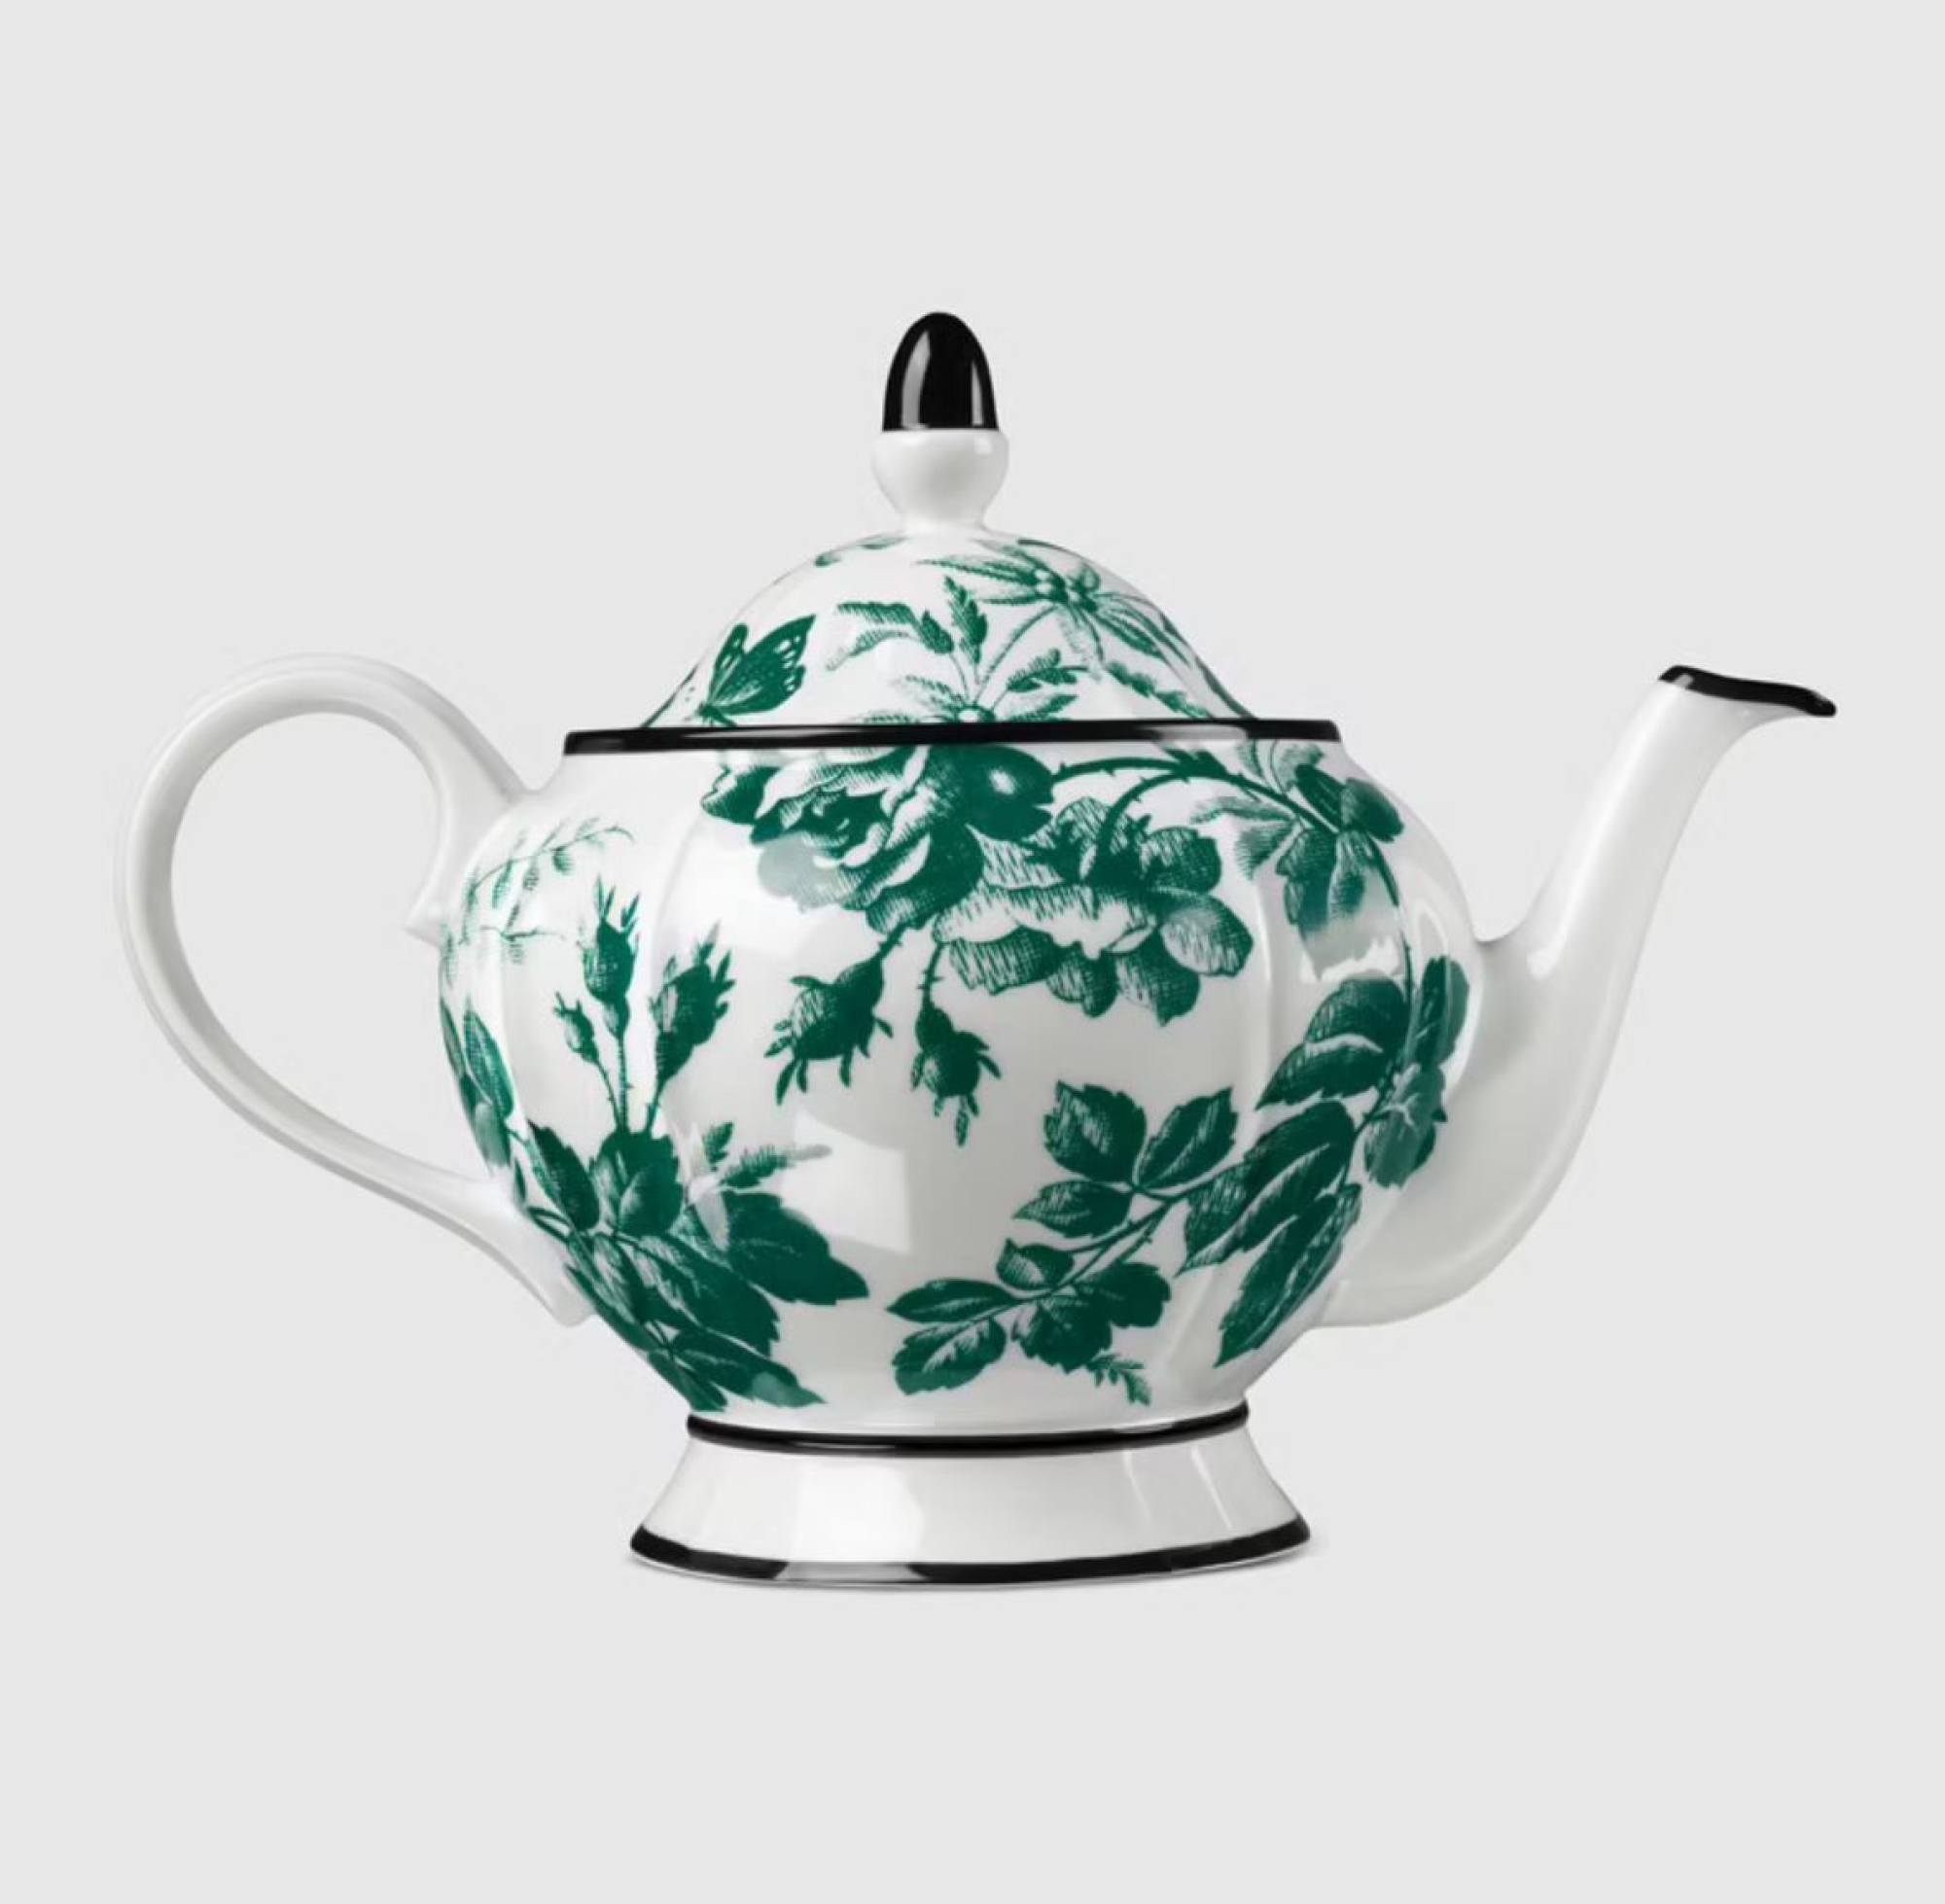 Gucci’s Herbarium teapot. Photo: Handout